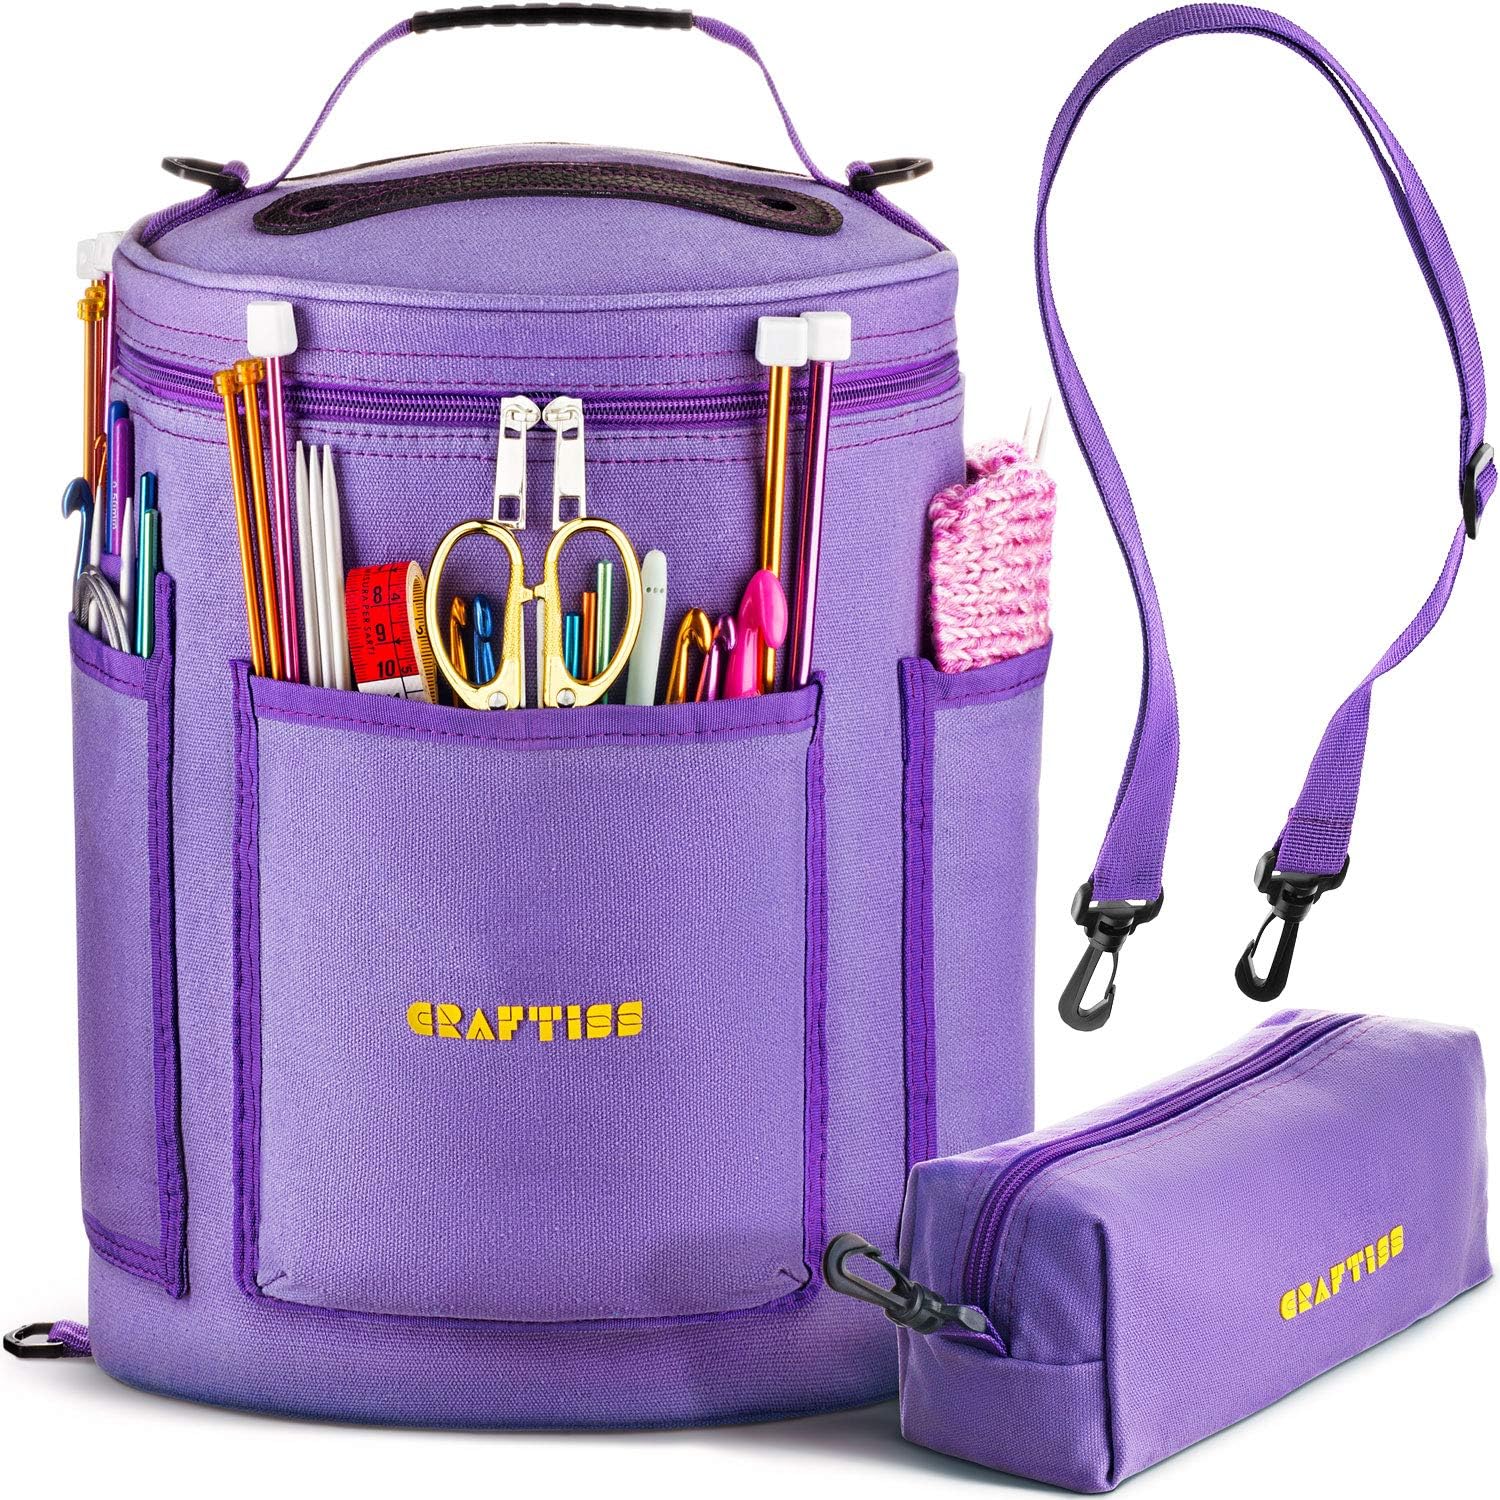 Yarn Storage Bag - Christmas Gift - Purple Tote Yarn Bag, Durable Knitting and Crochet Organizer with Needle Case